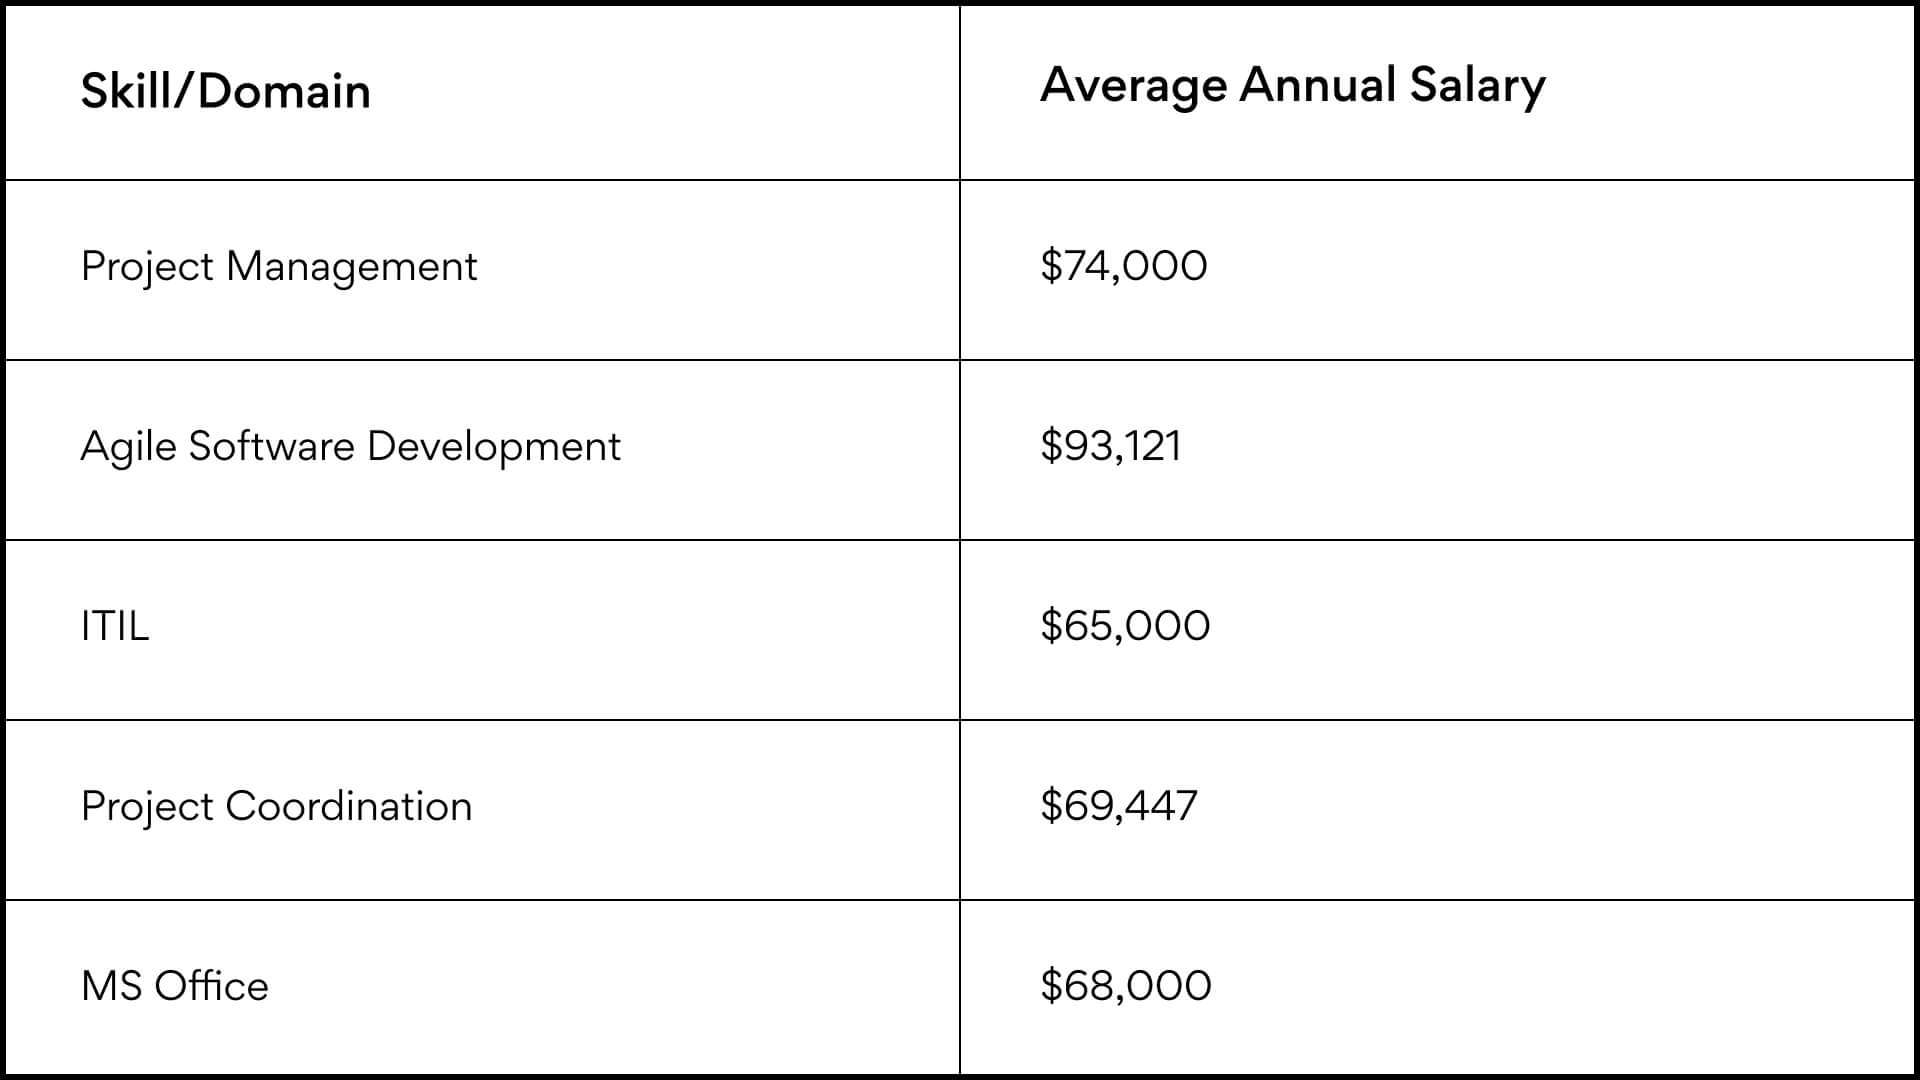 domain based comparison in salaries